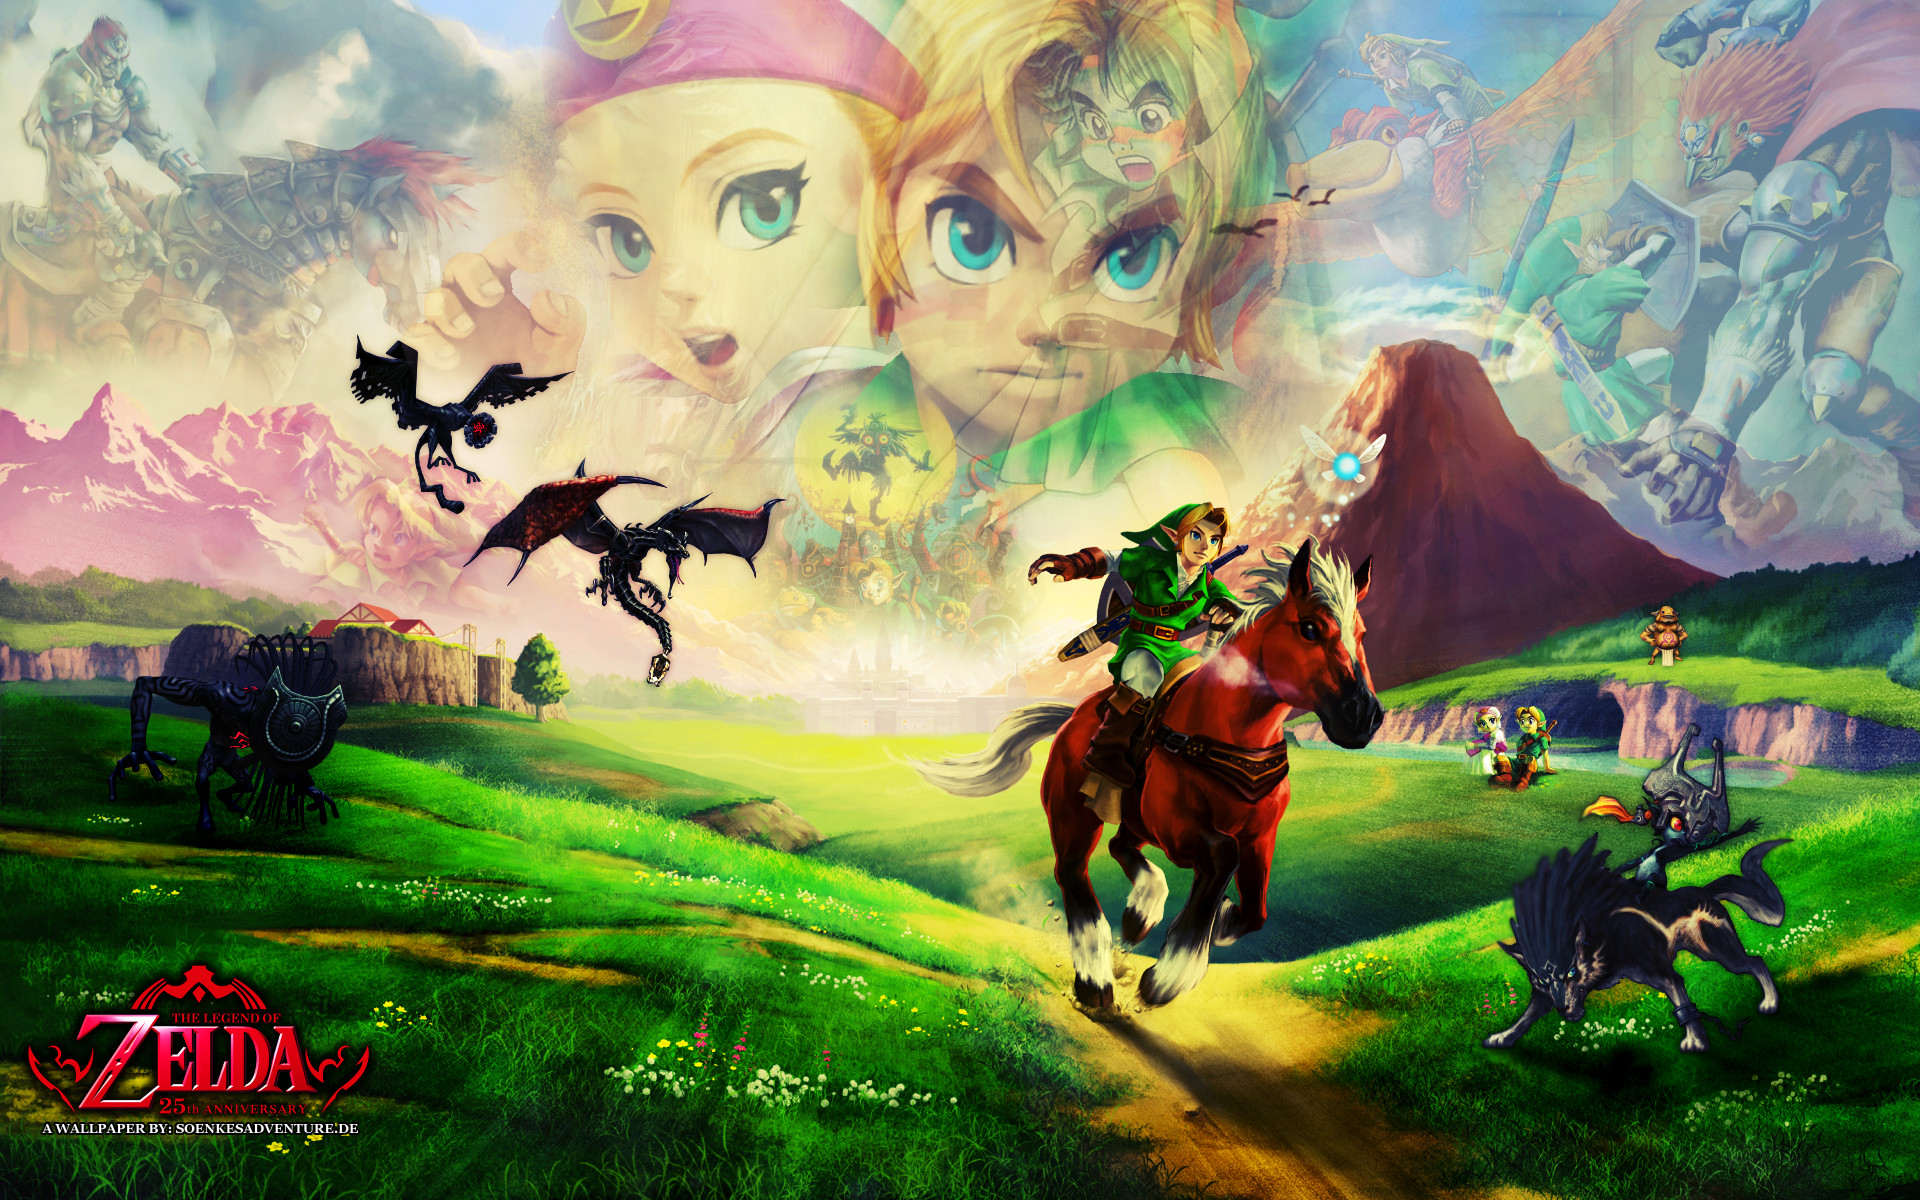 3D Legend of Zelda Wallpaper 67 images